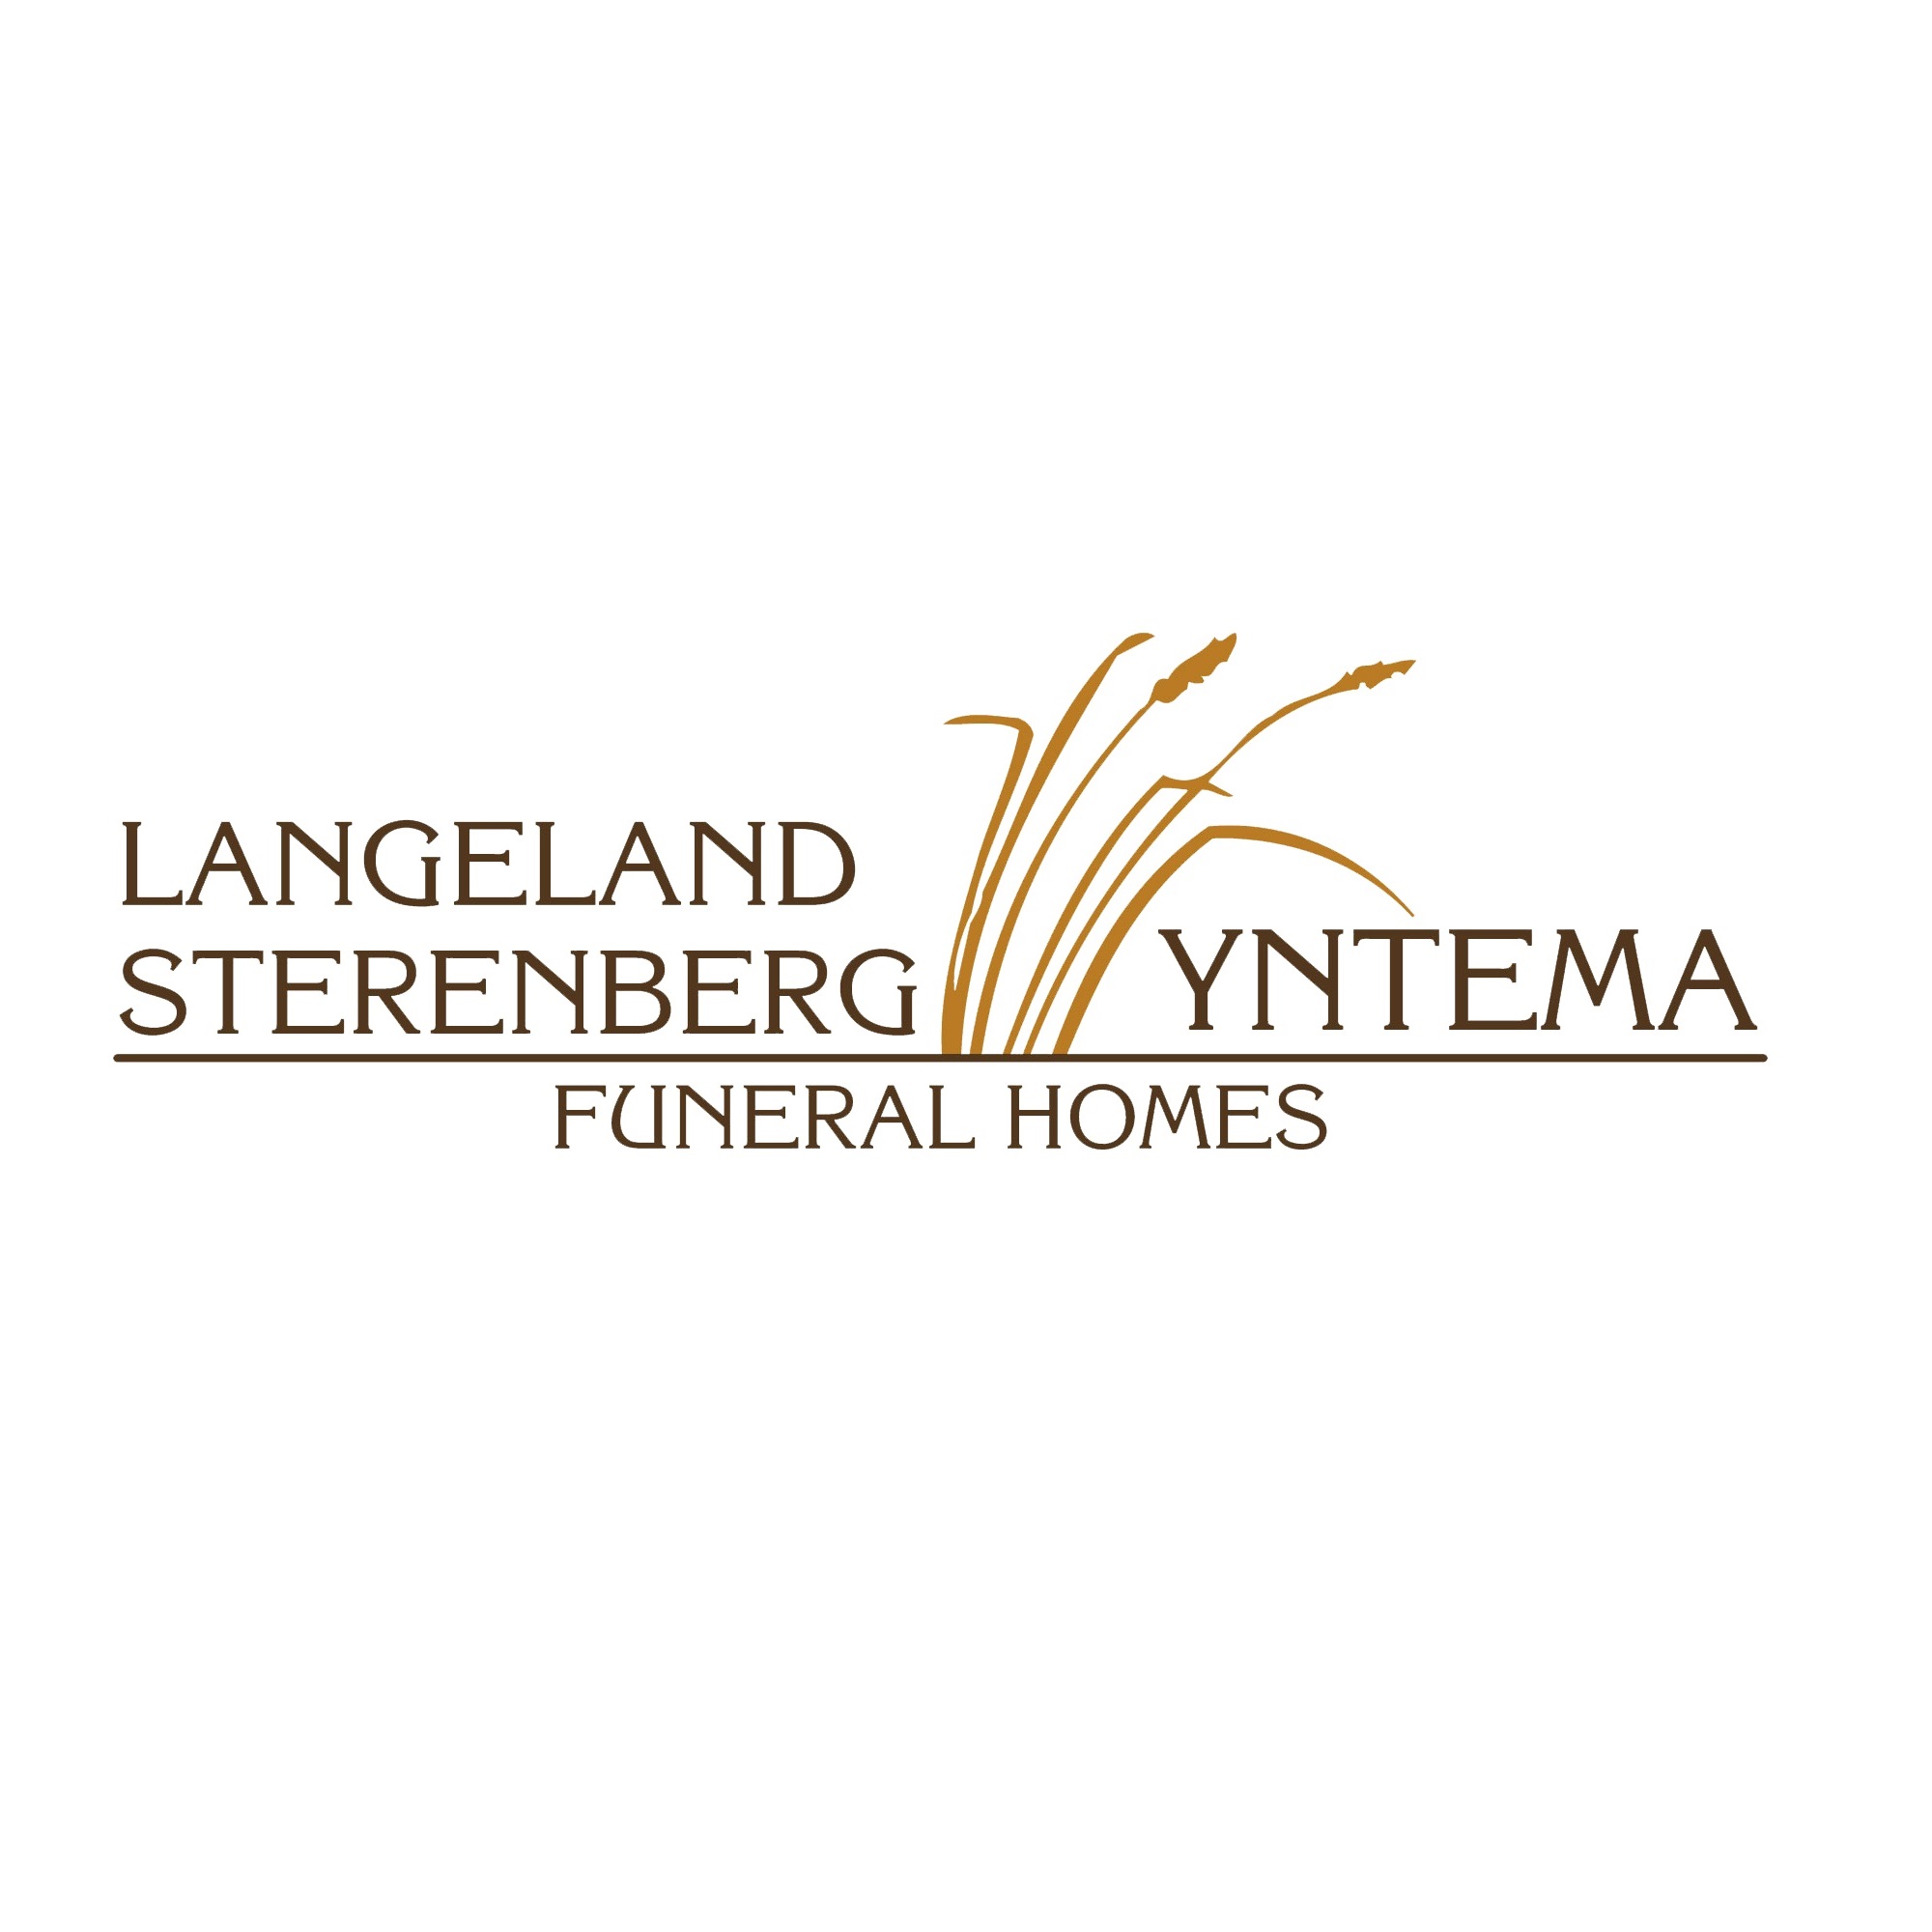 langeland-sterenberg funeral home | funeral directors in holland